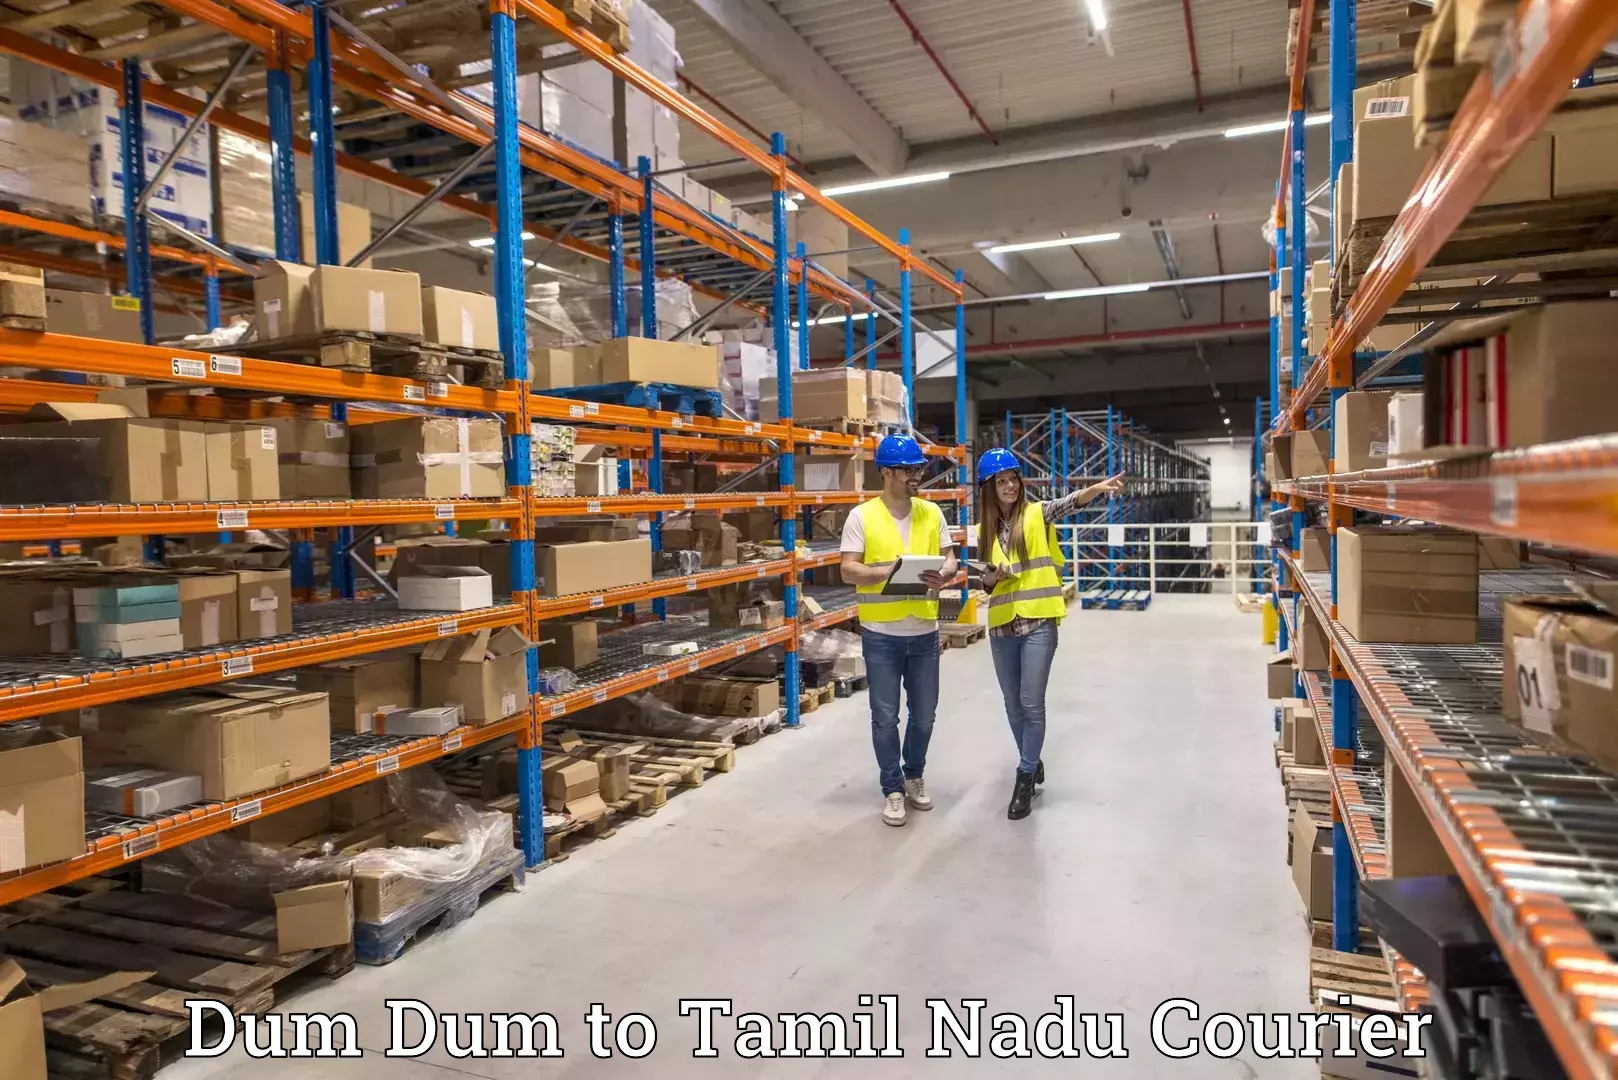 Nationwide delivery network Dum Dum to Tamil Nadu